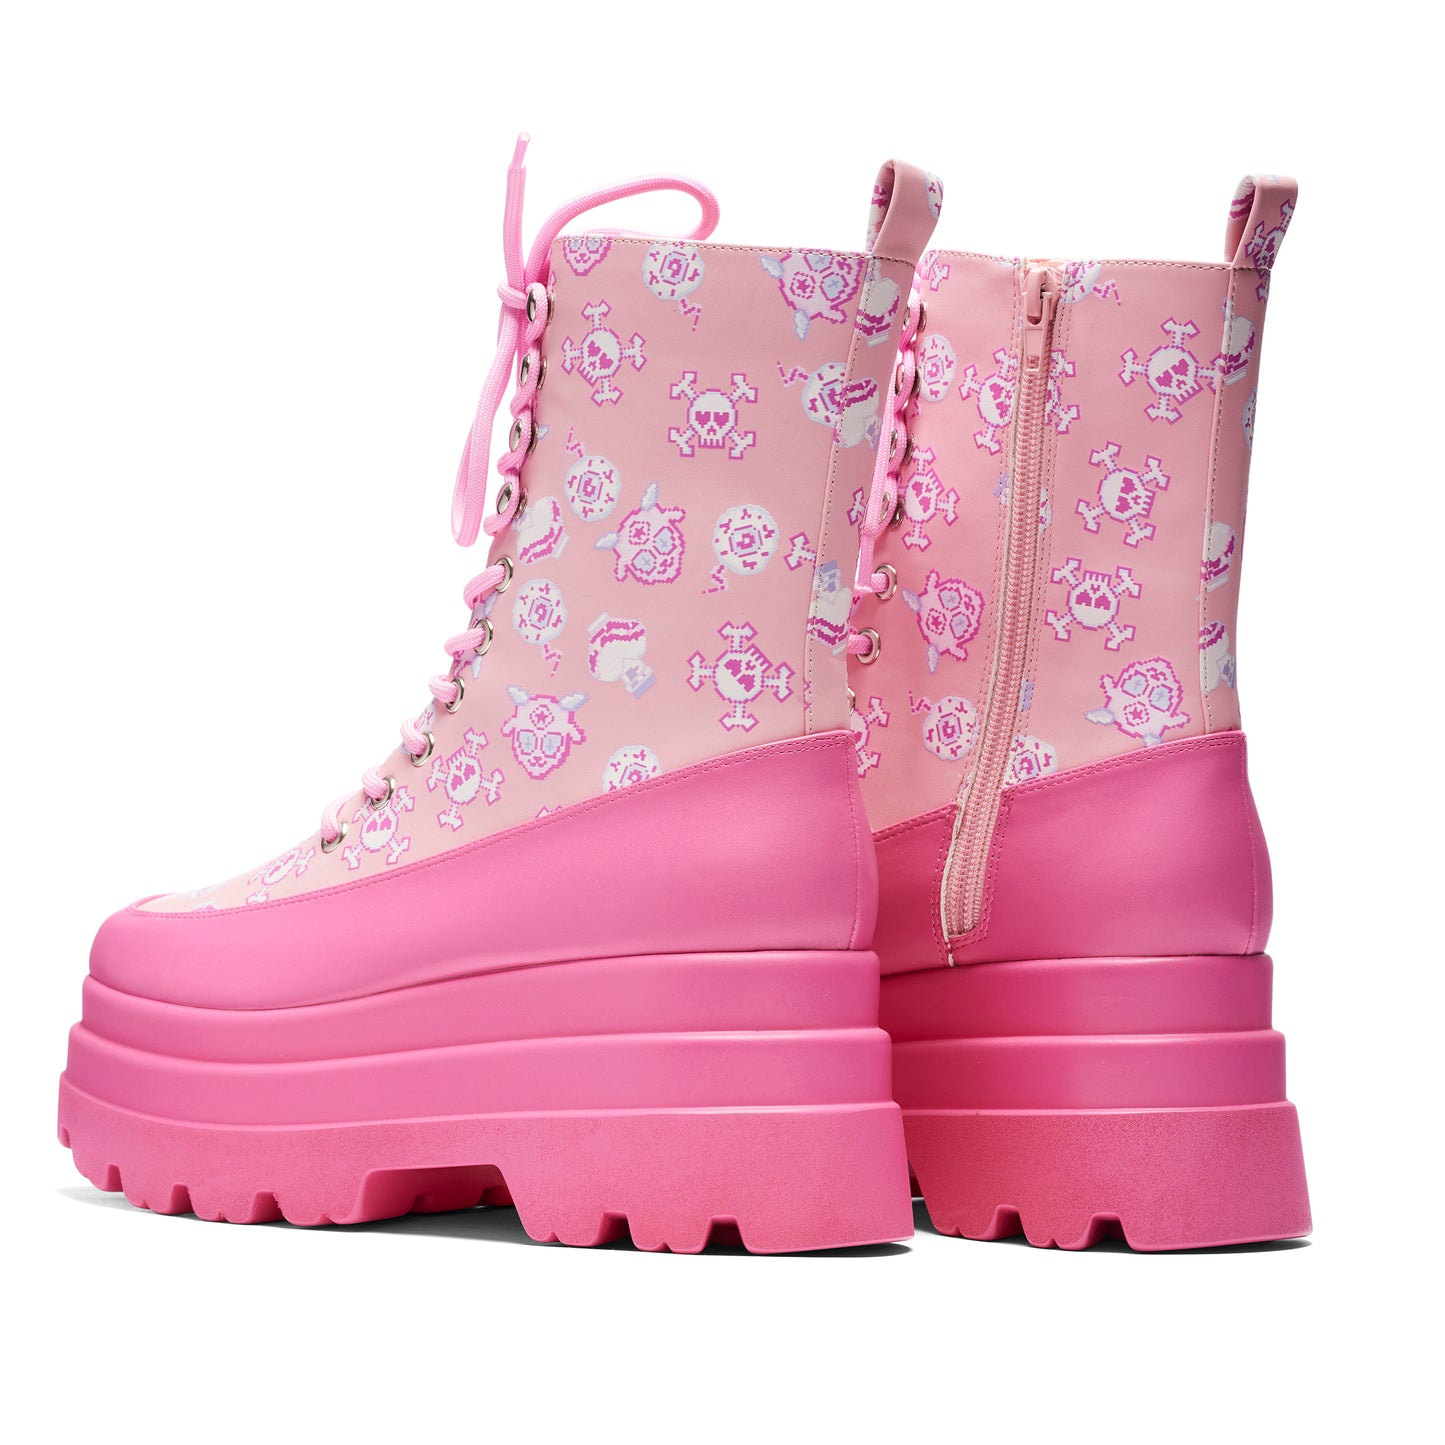 Pink Magic Yami Printed Trident Boots - Pink - KOI Footwear - Back View